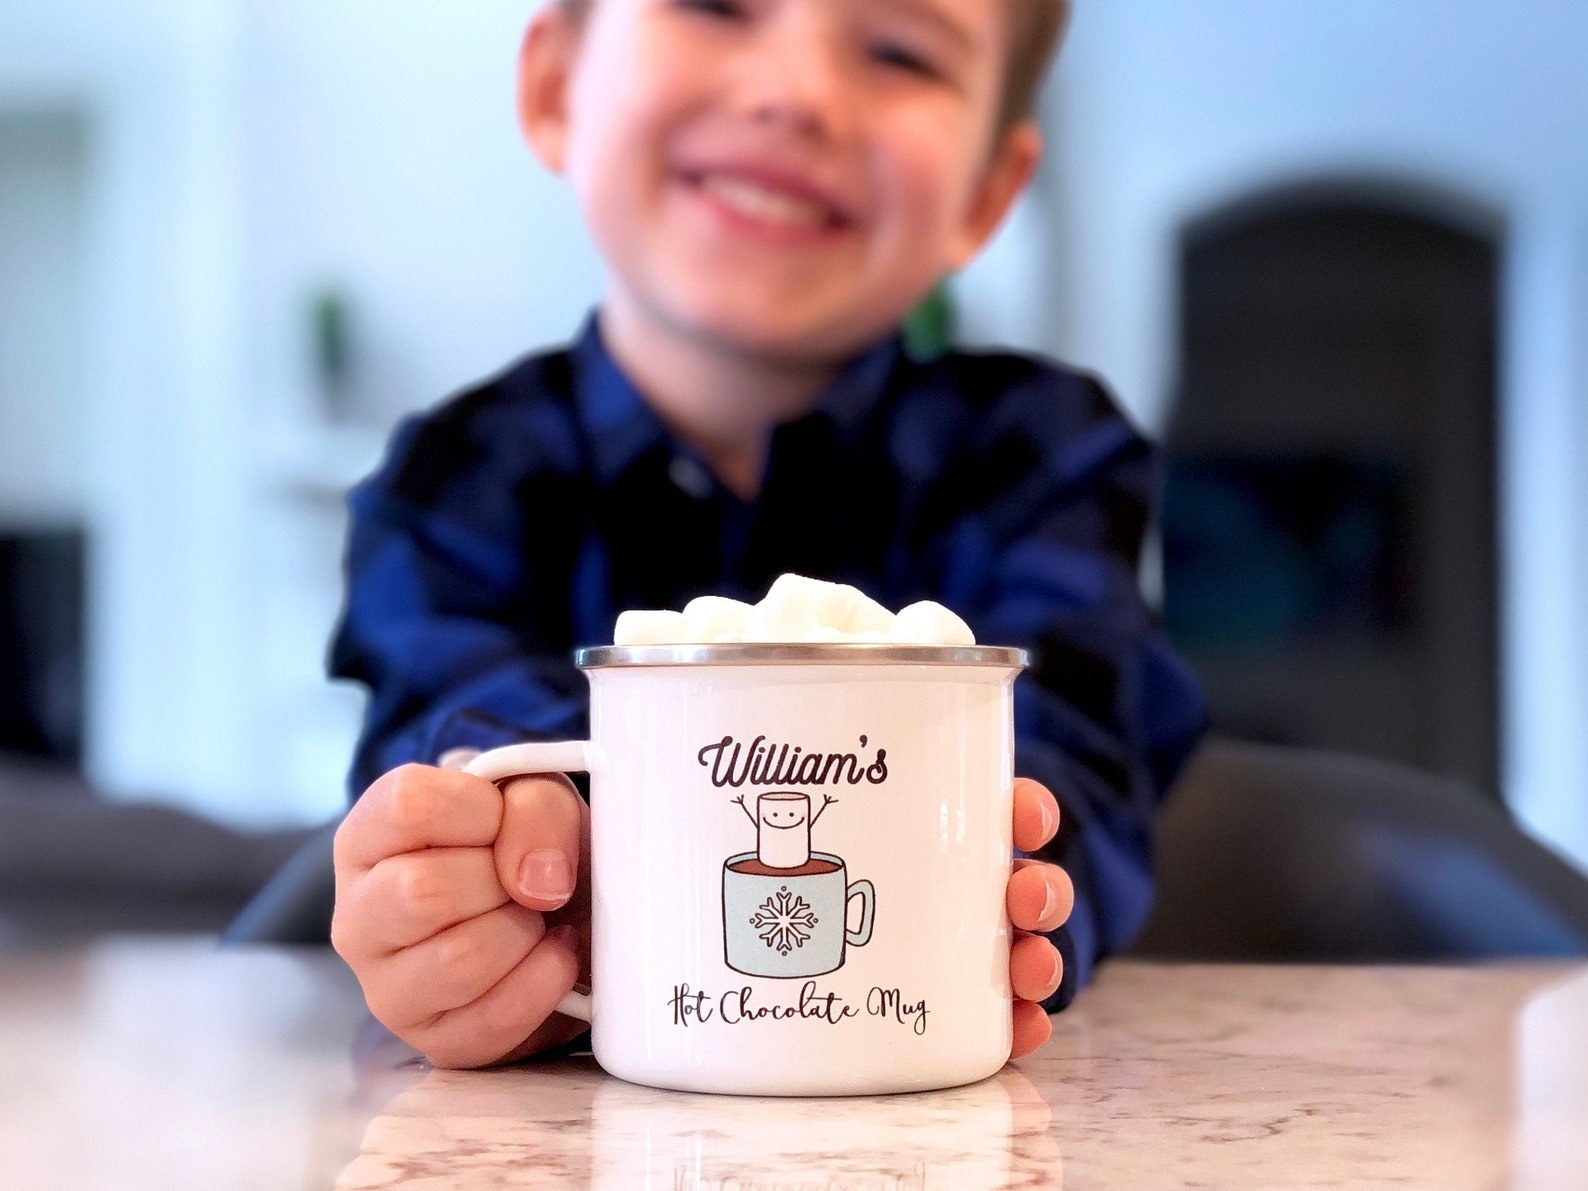 A child holding a personalized mug